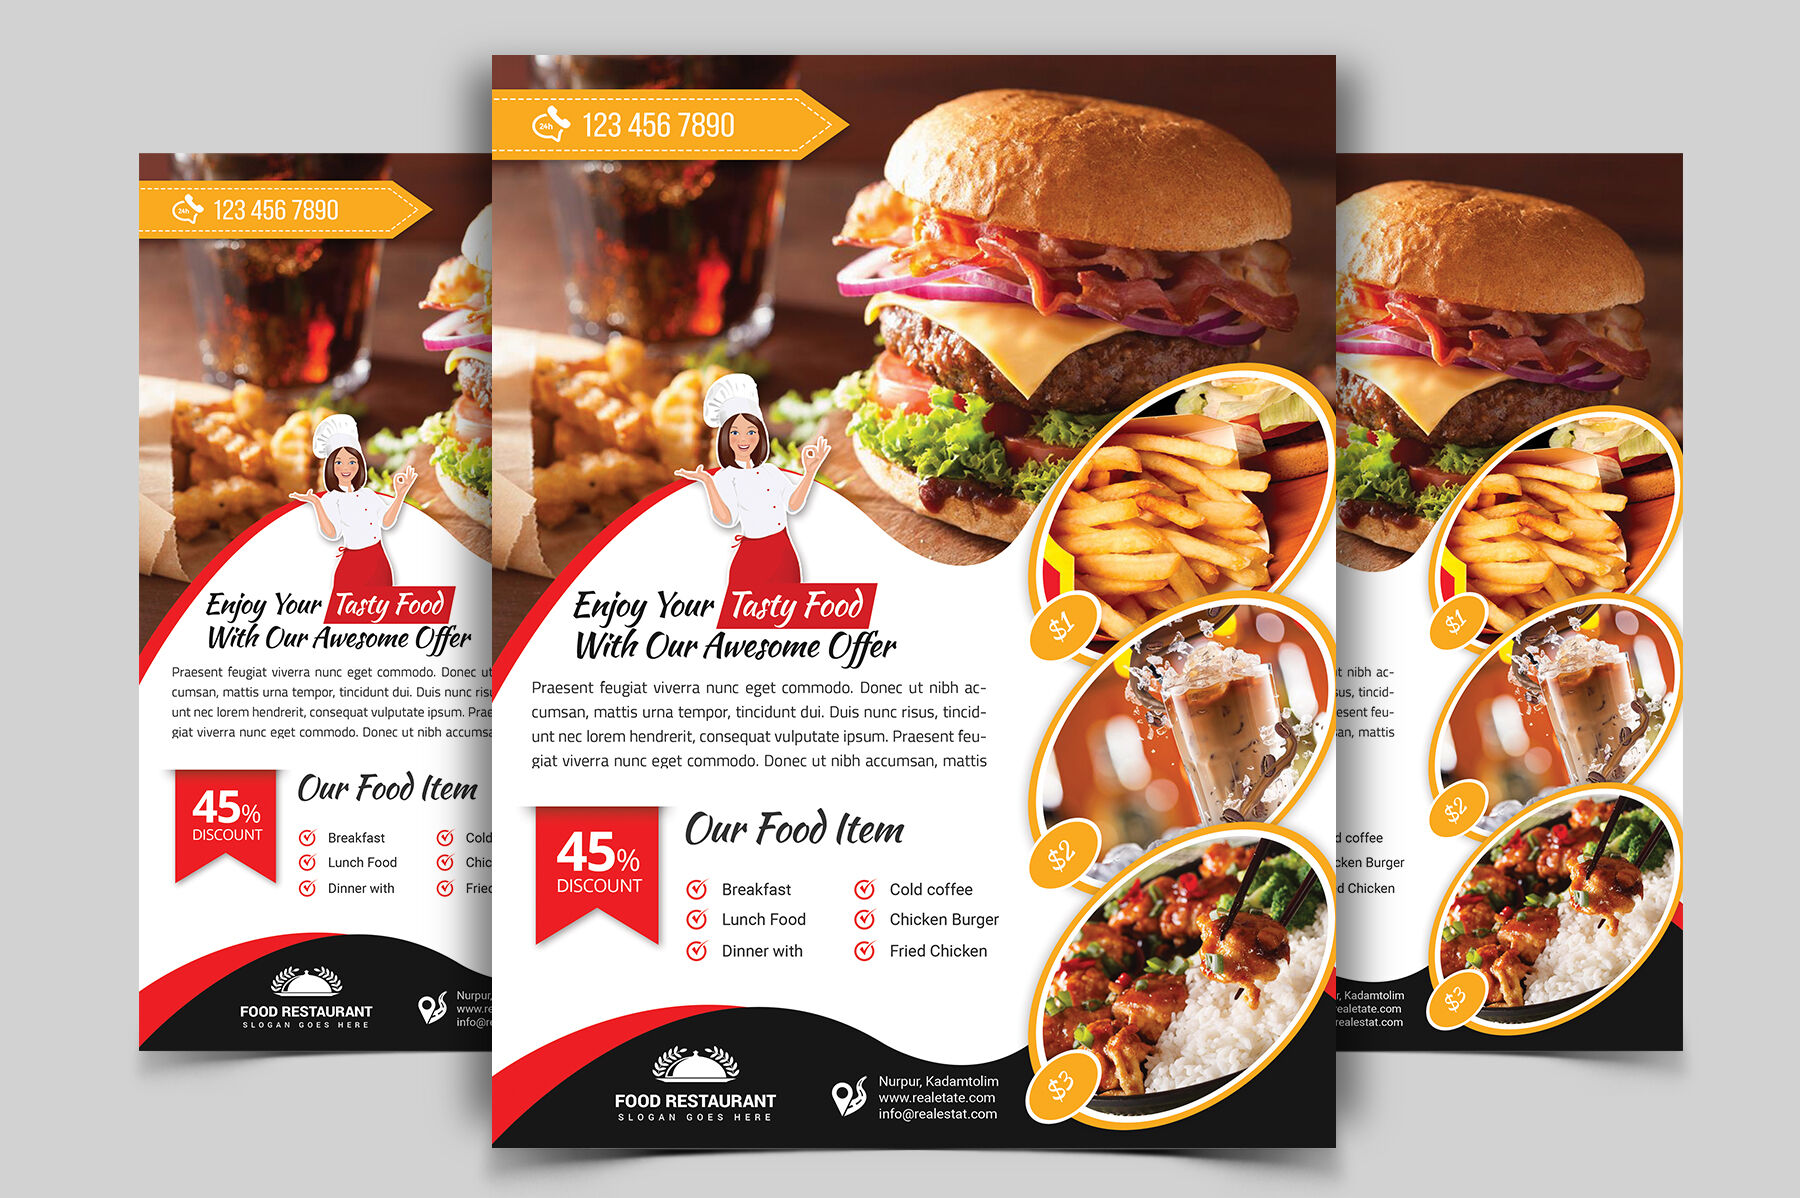 Download Free Restaurant Flyer Mockup Psd Free Download - Free PSD ...